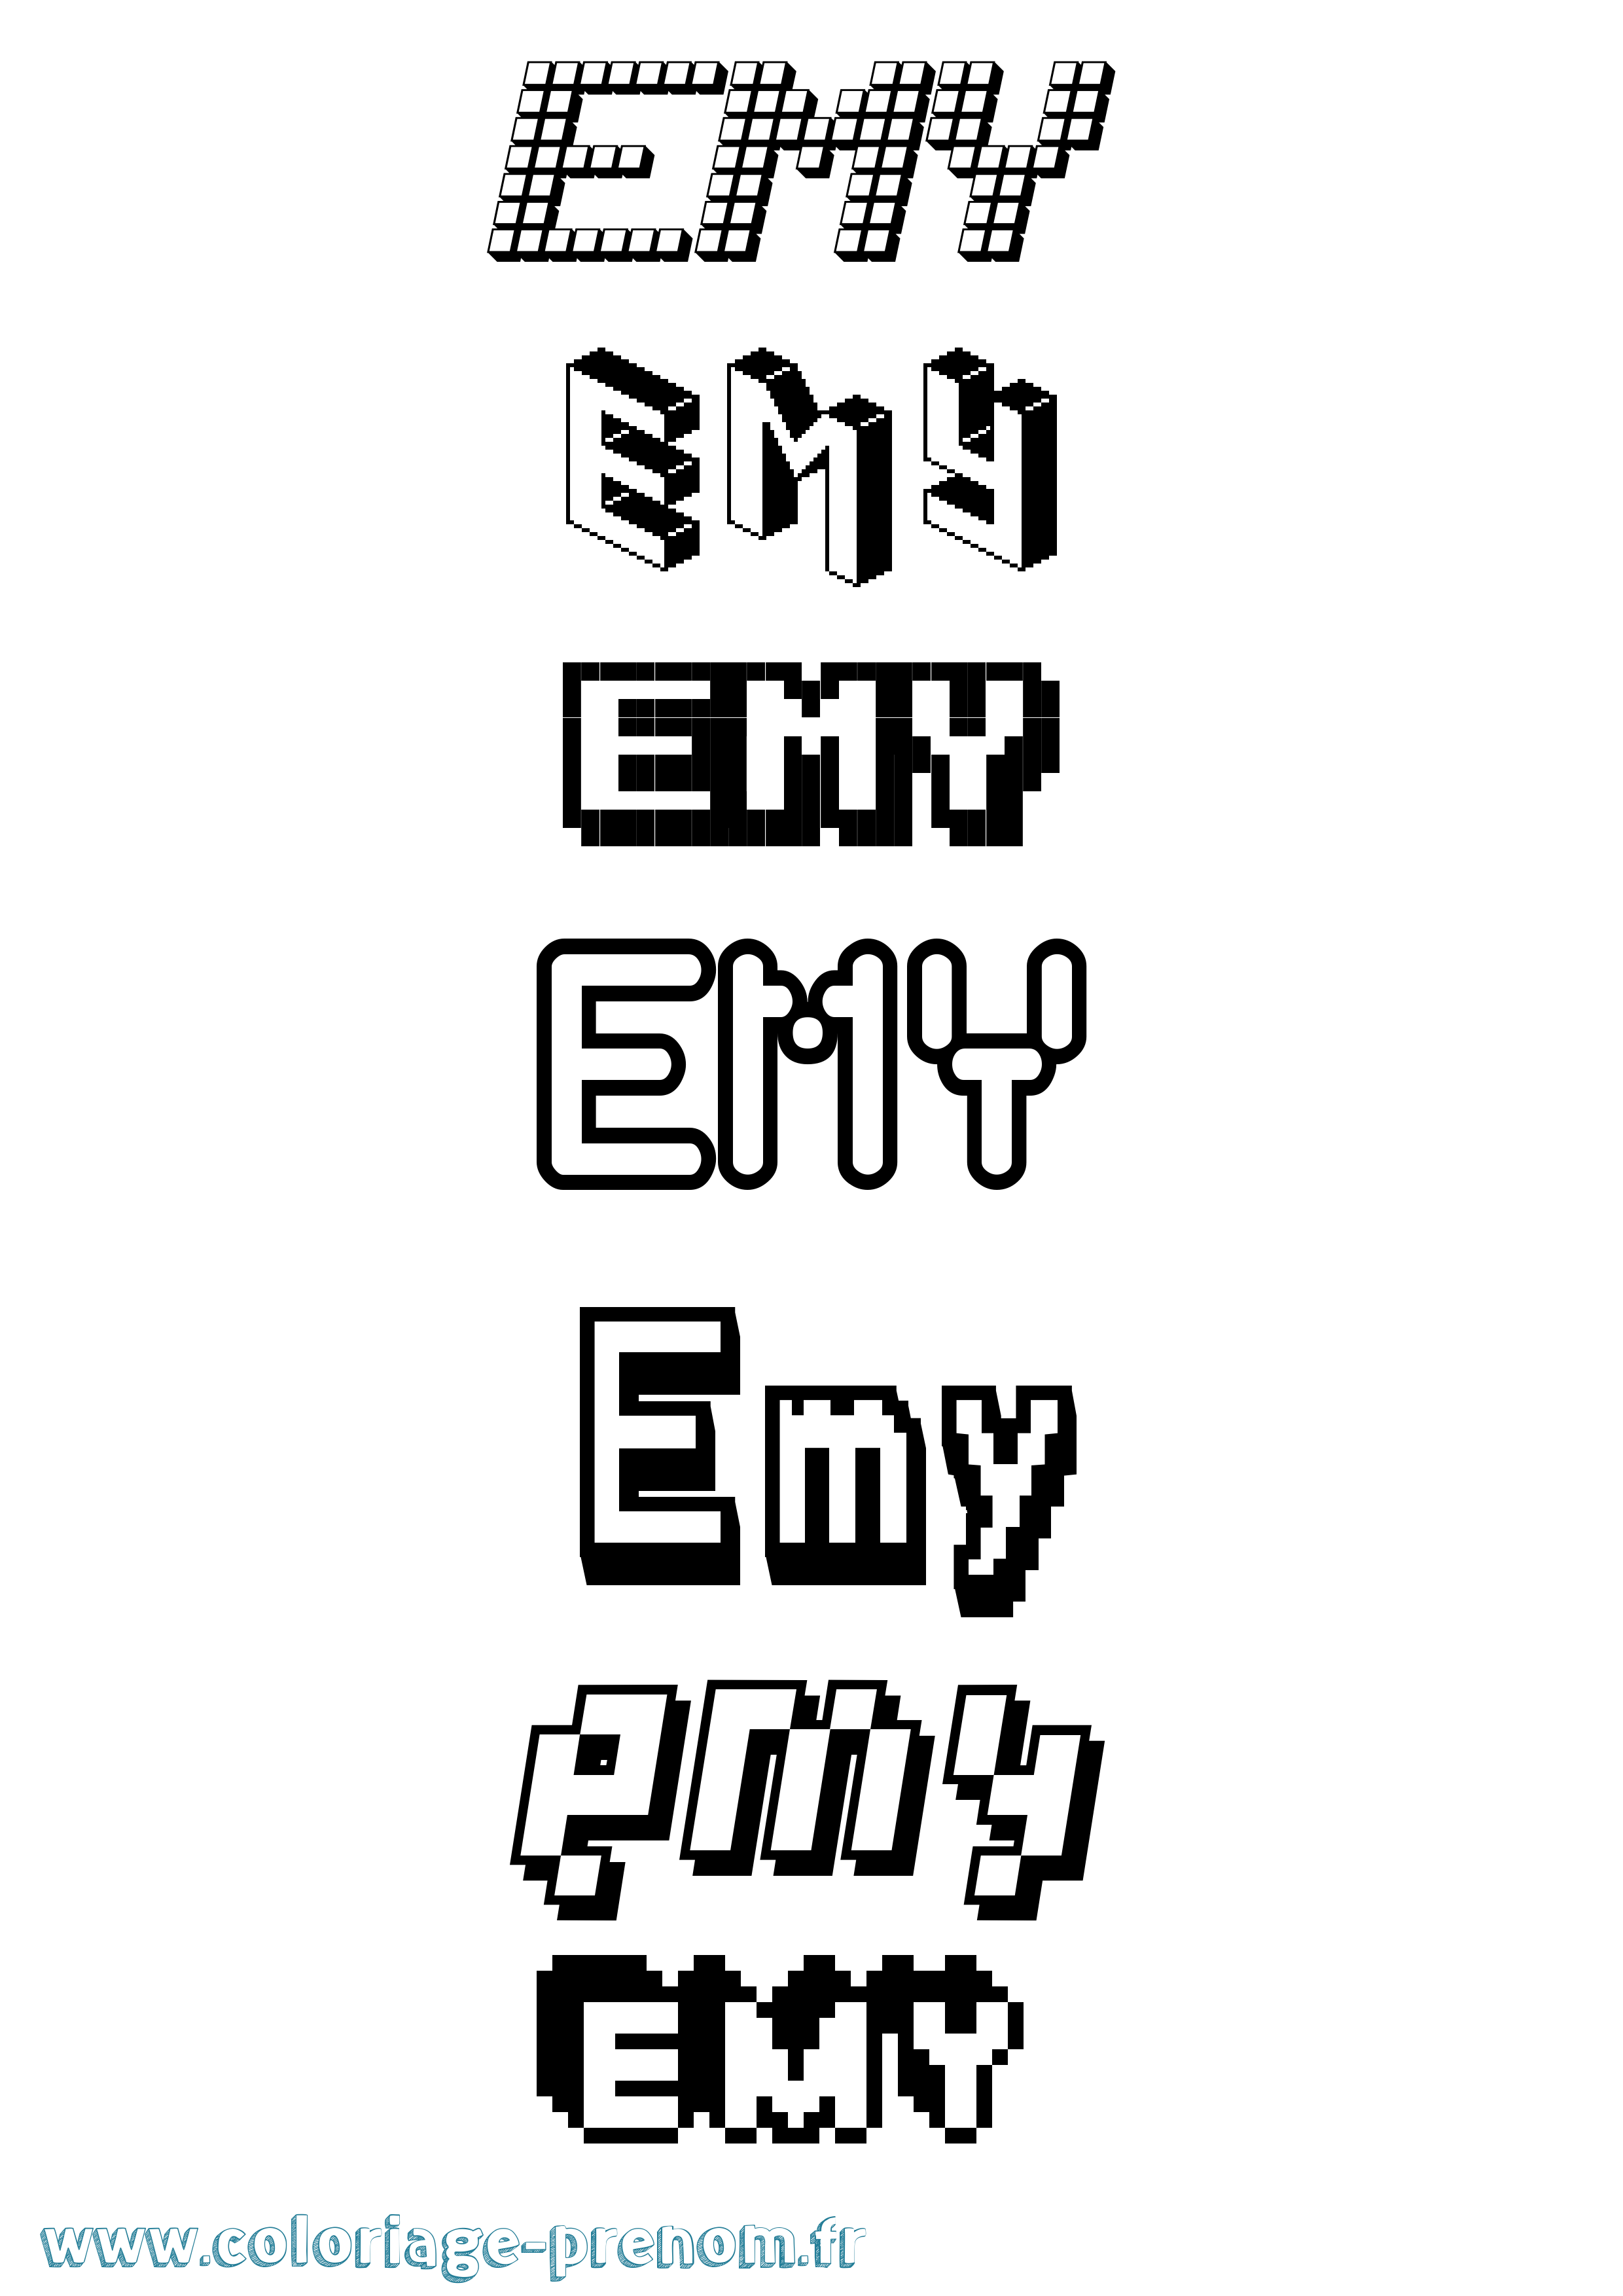 Coloriage prénom Emy Pixel